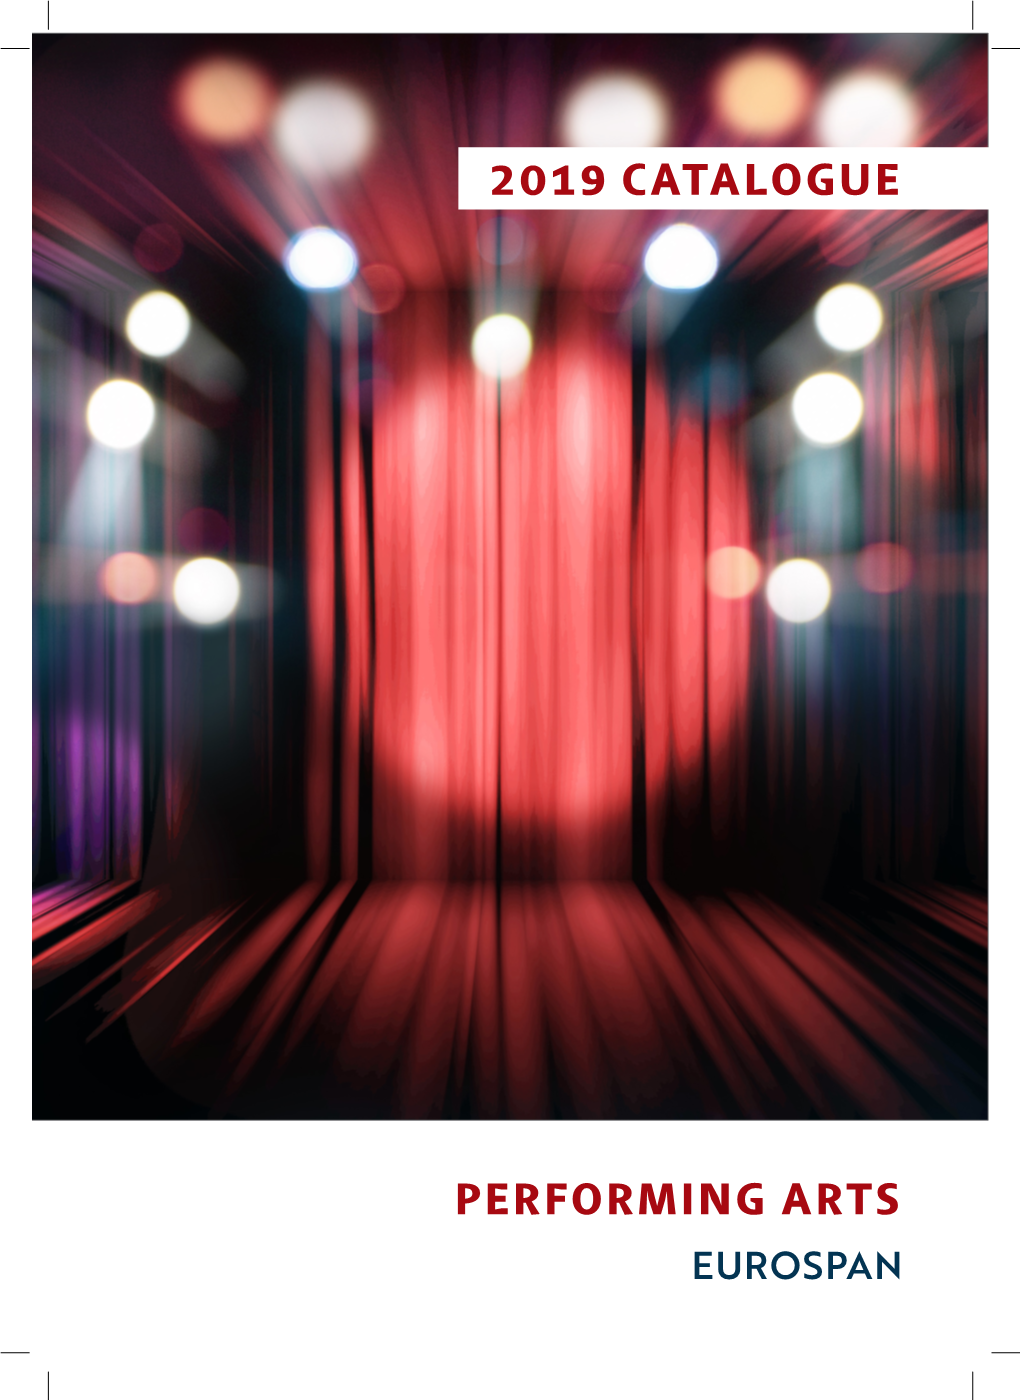 Performing Arts 2019 Catalogue